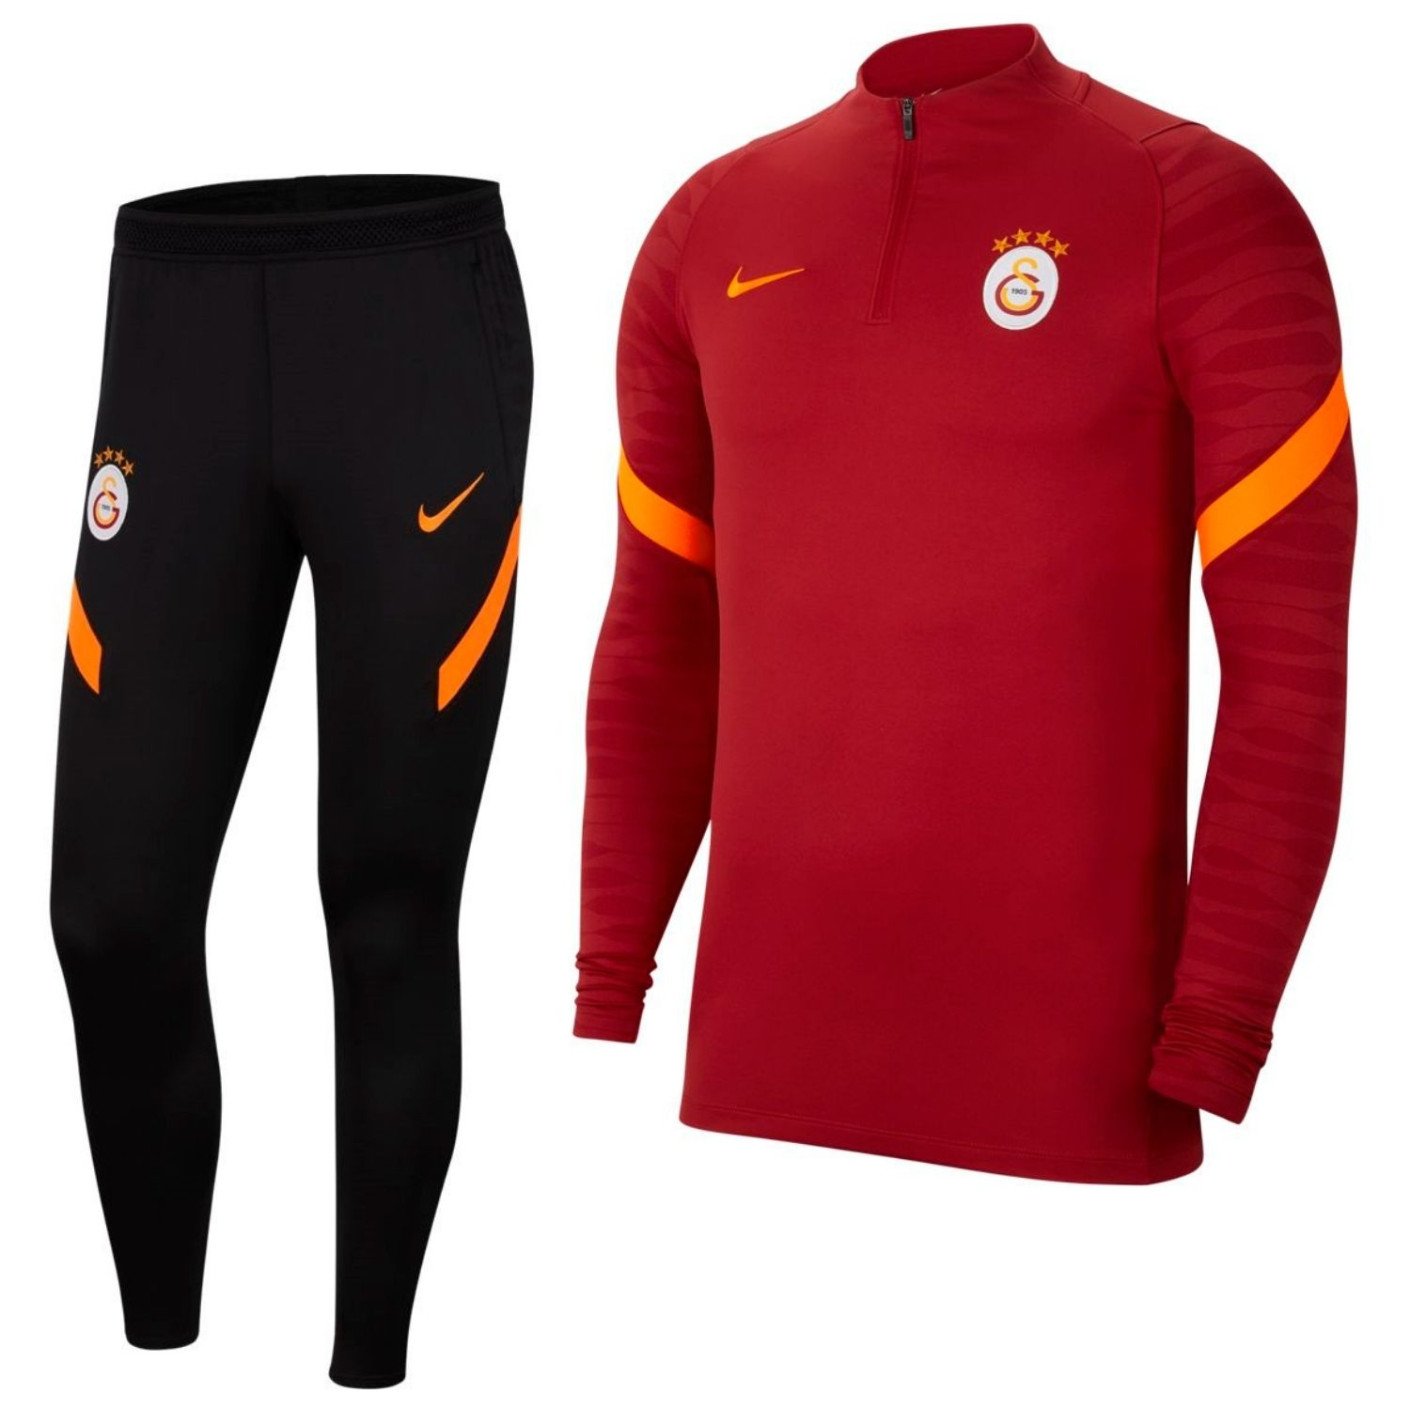 Verbanning het formulier maat Nike Galatasaray Strike Trainingspak 2021-2022 Rood Zwart Oranje